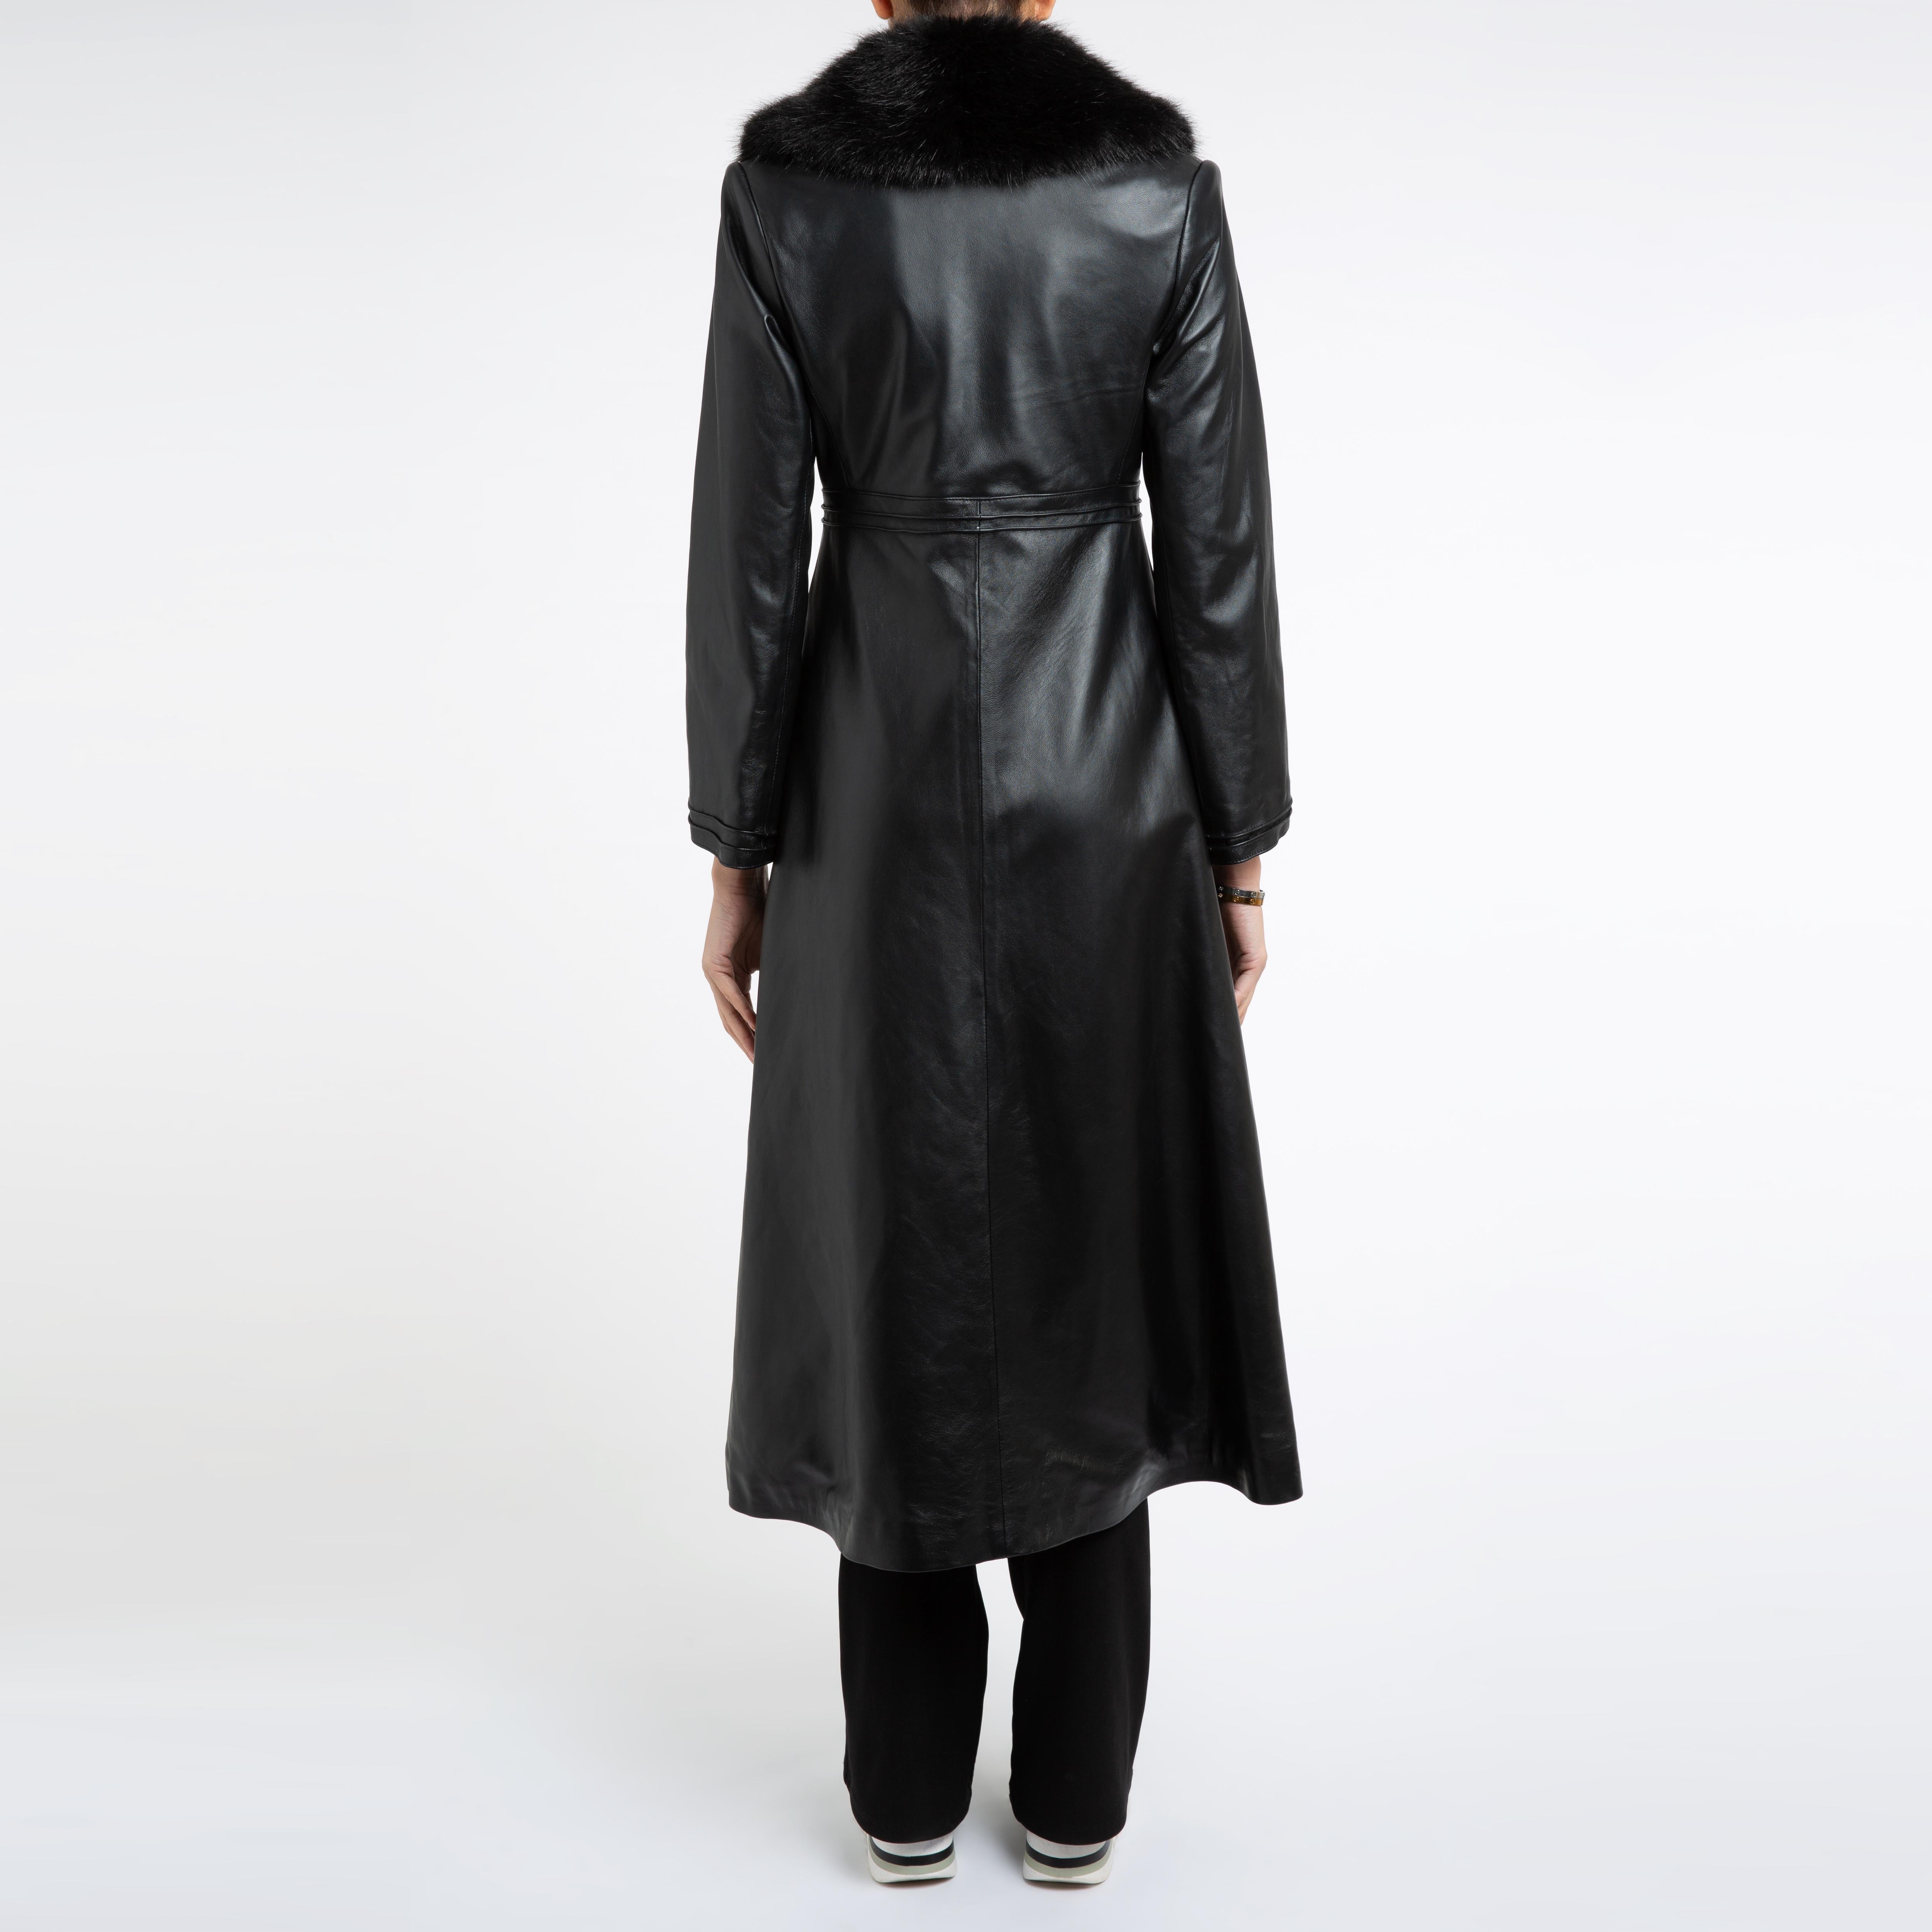 Verheyen London Edward Leather Coat with Faux Fur Collar in Black - Size uk 14 For Sale 1